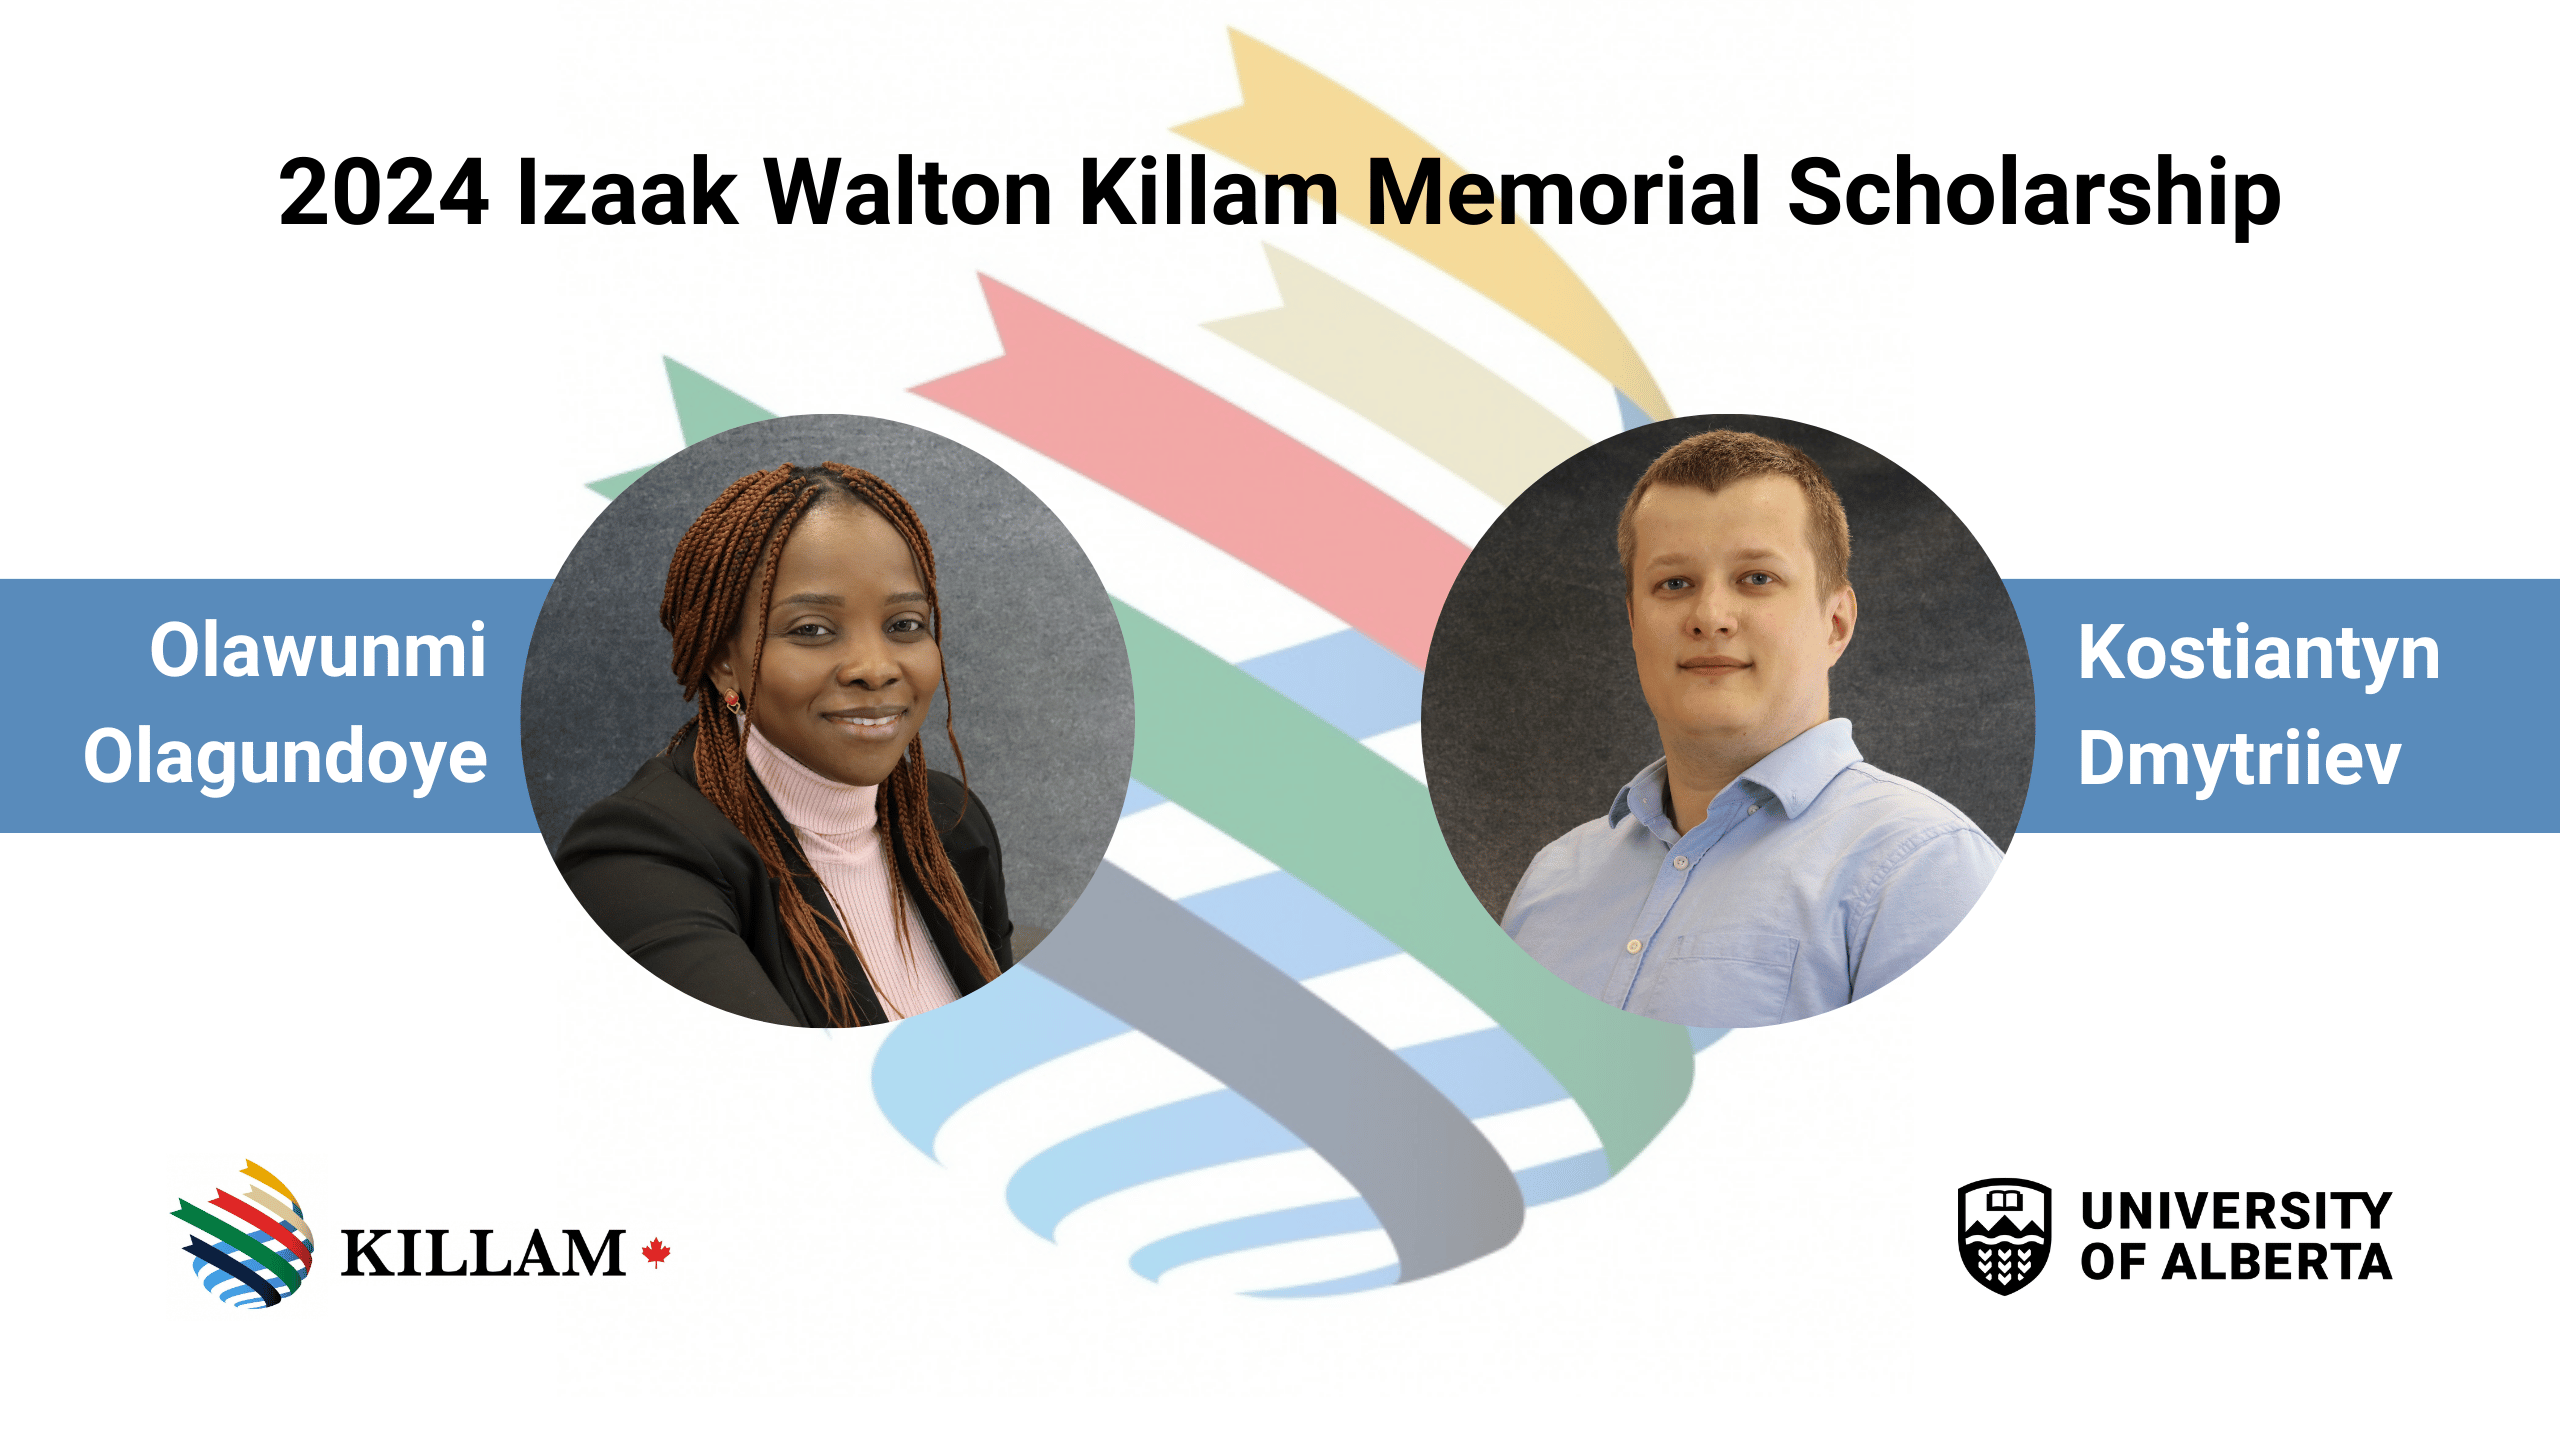 2024-06-20-izaak-walton-killam-memorial-scholarship.png